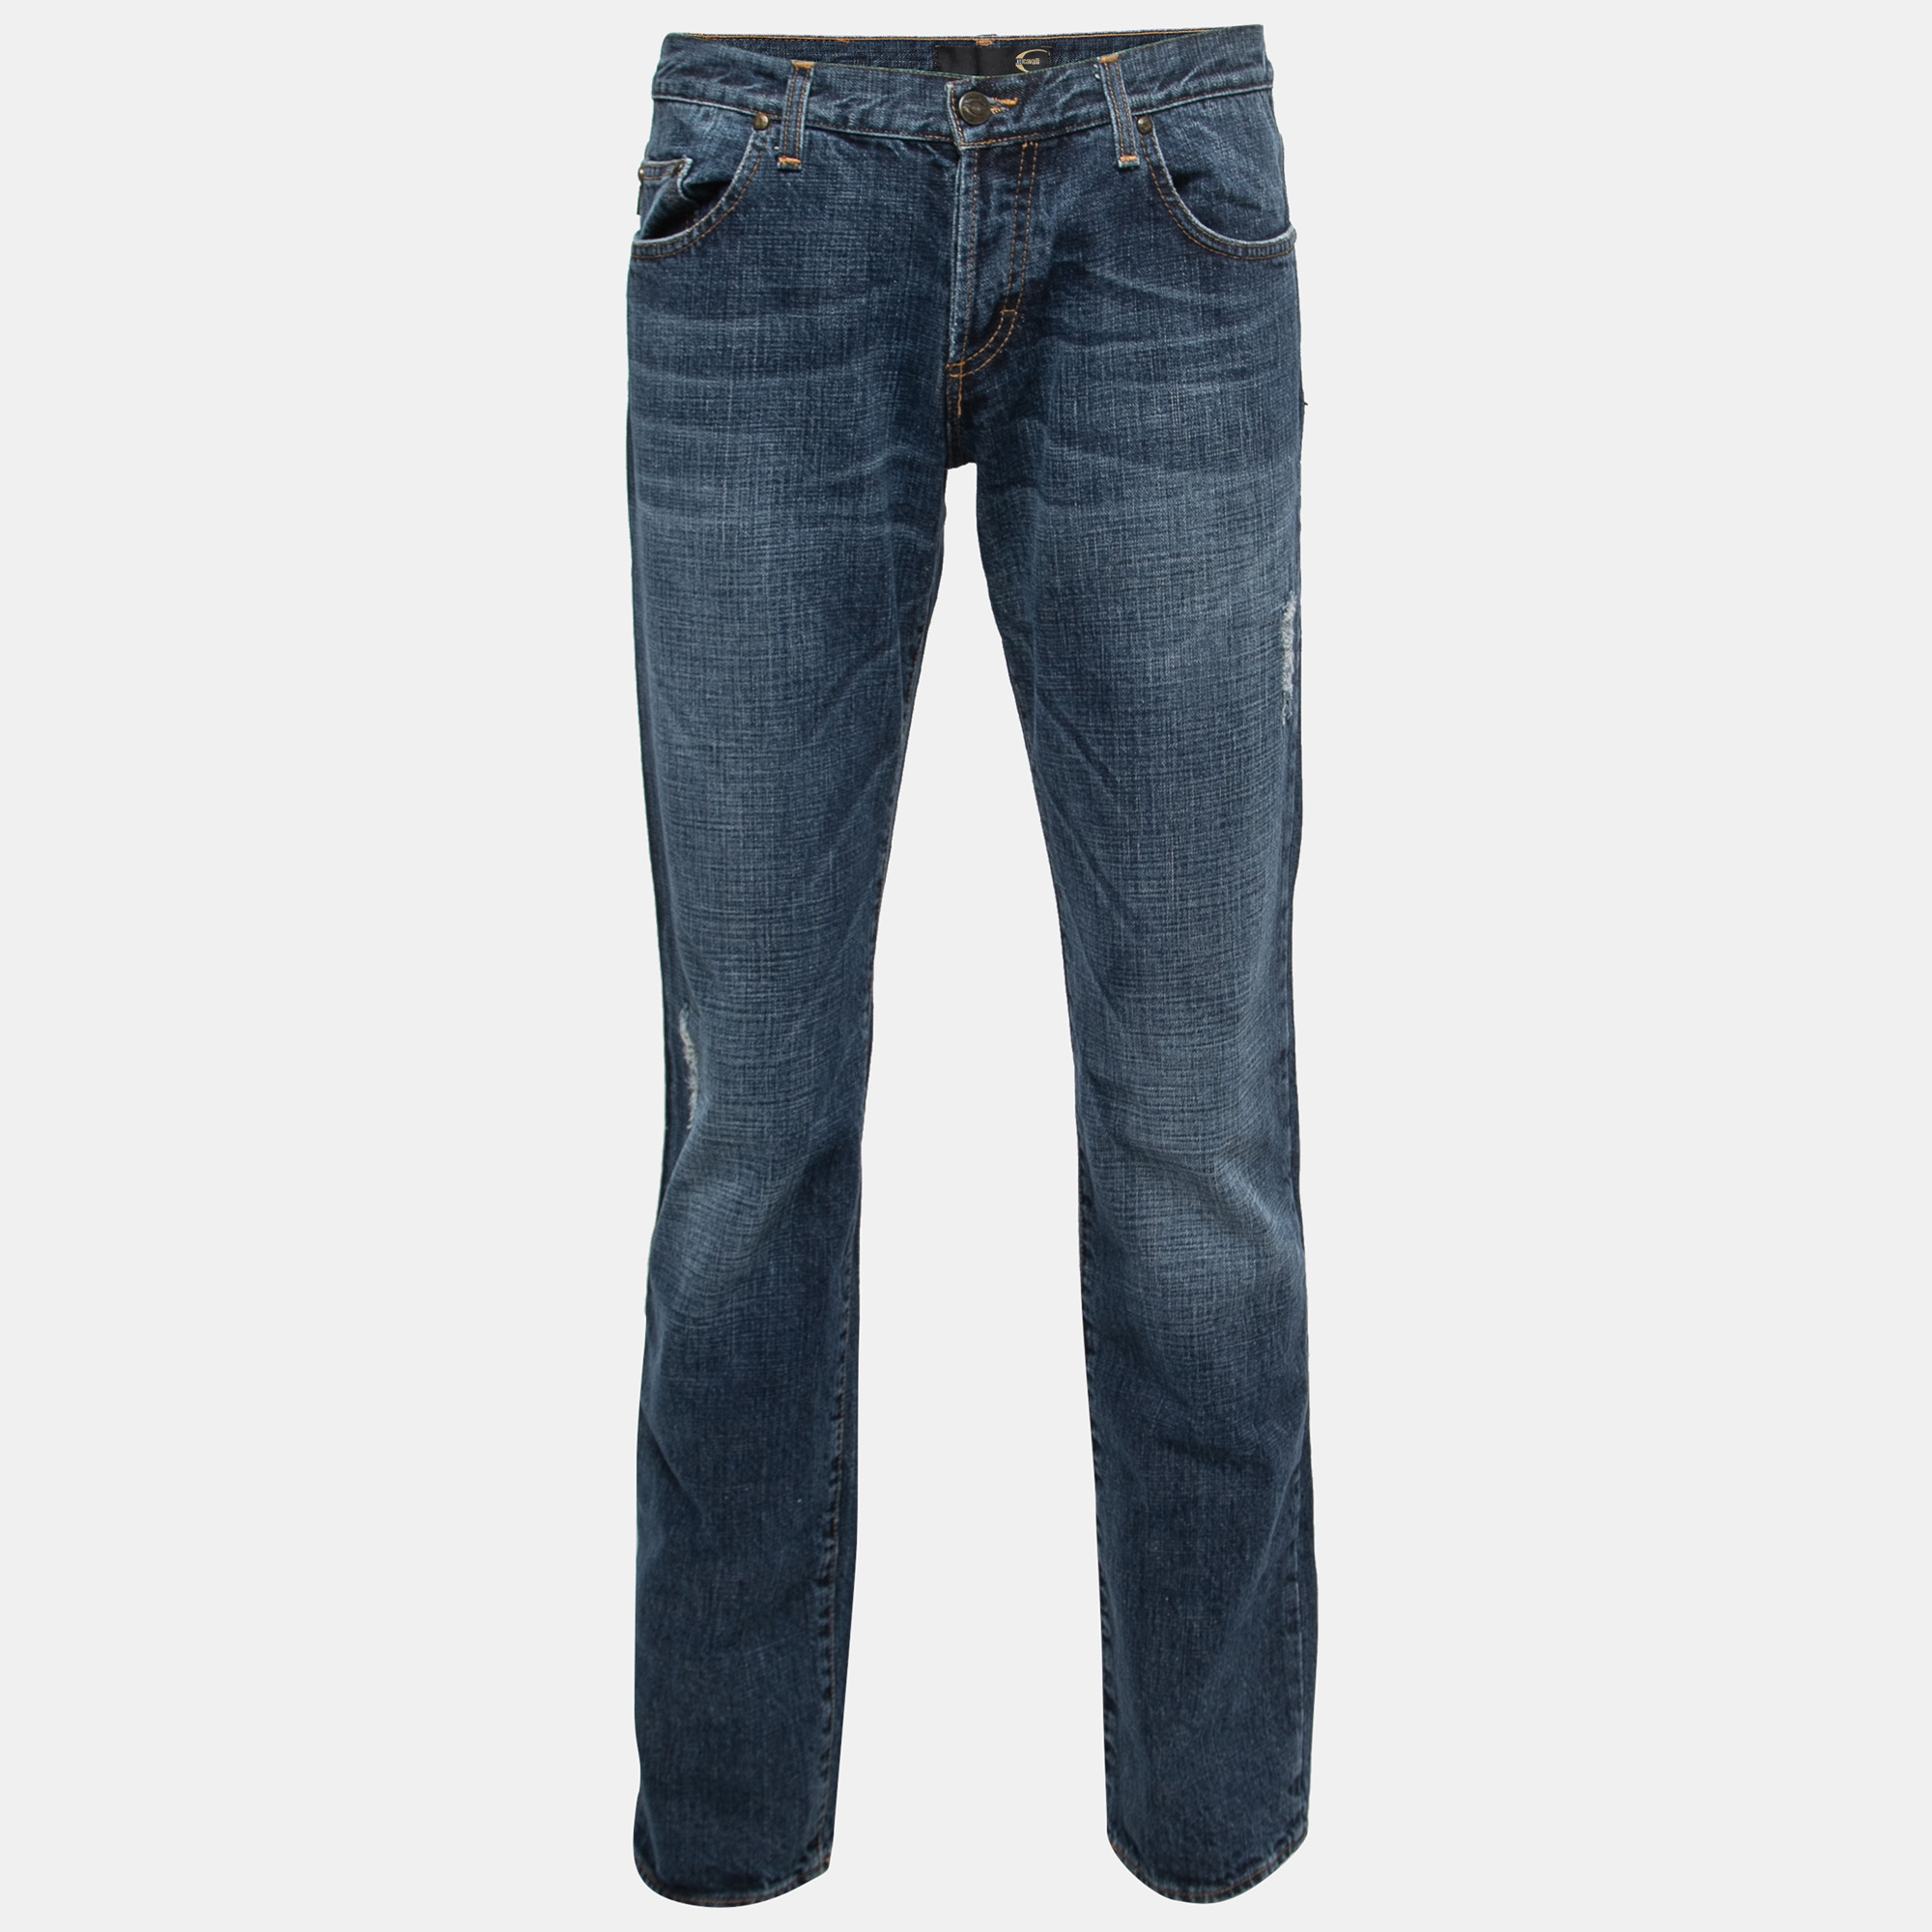 Pre-owned Just Cavalli Blue Distressed Denim Jeans L Waist 33"